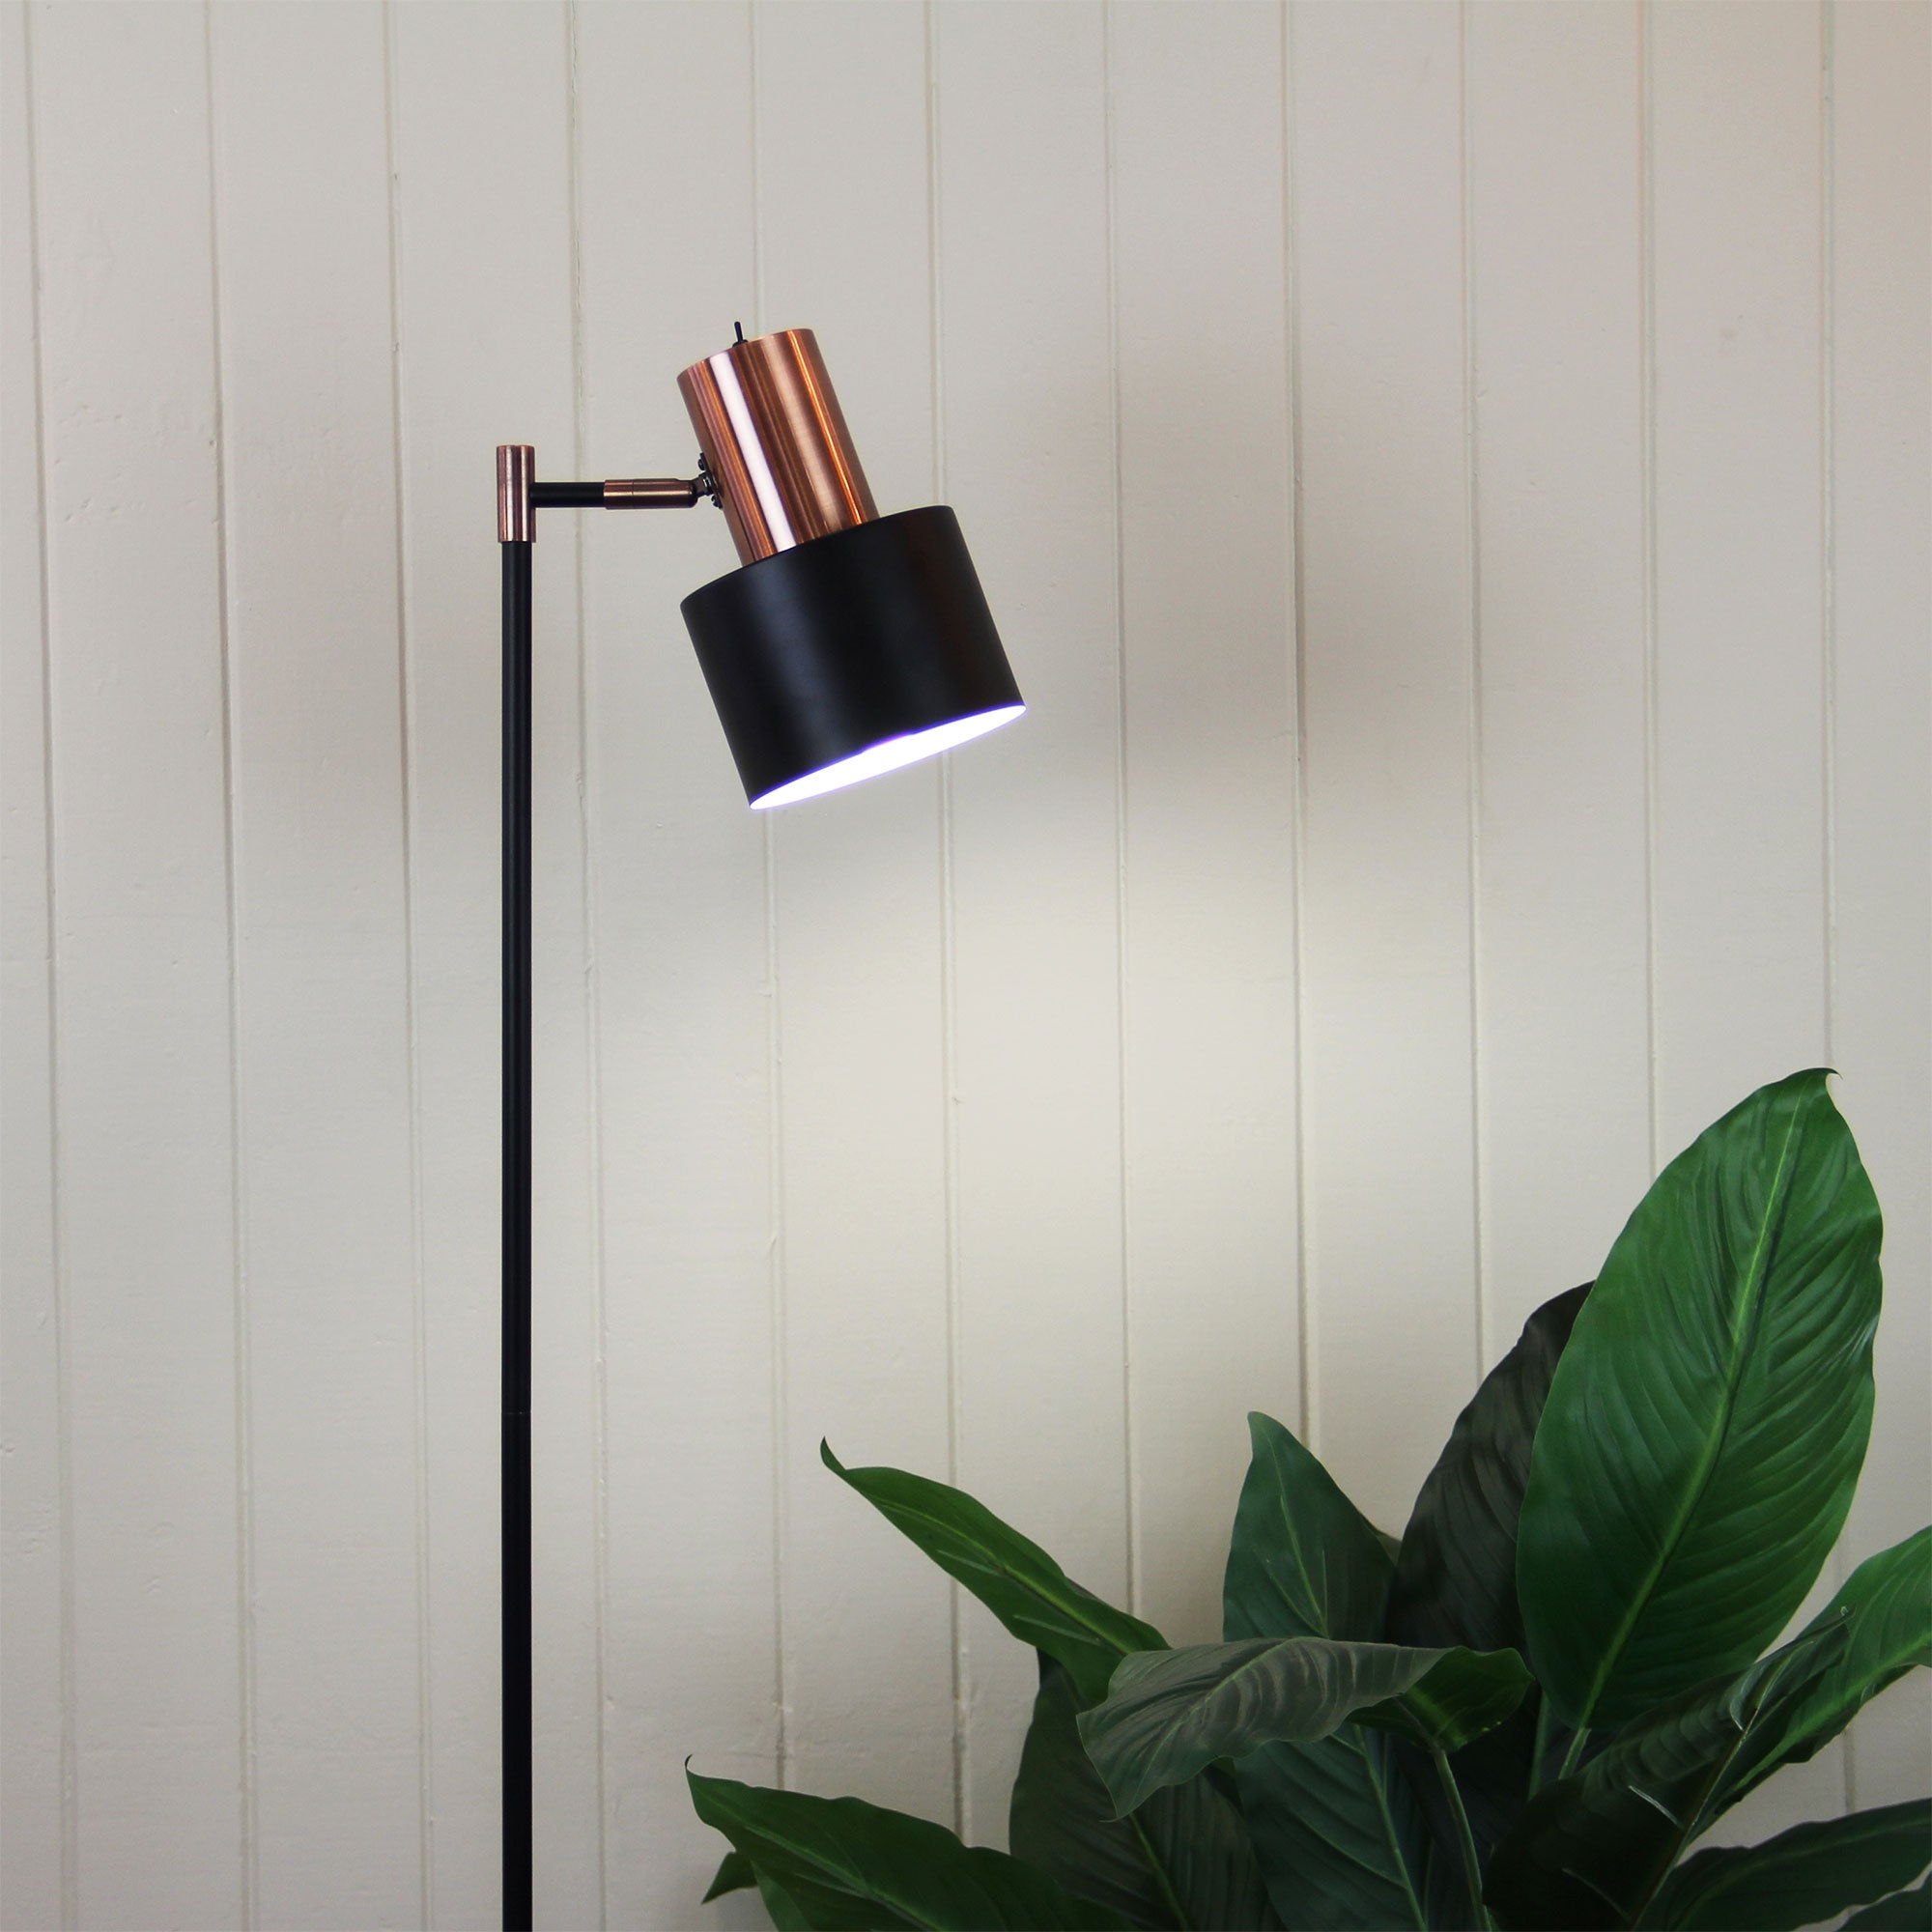 Buy Floor Lamps Australia Ari 1 Light Floor Lamp Black With Copper Head - SL98787CO